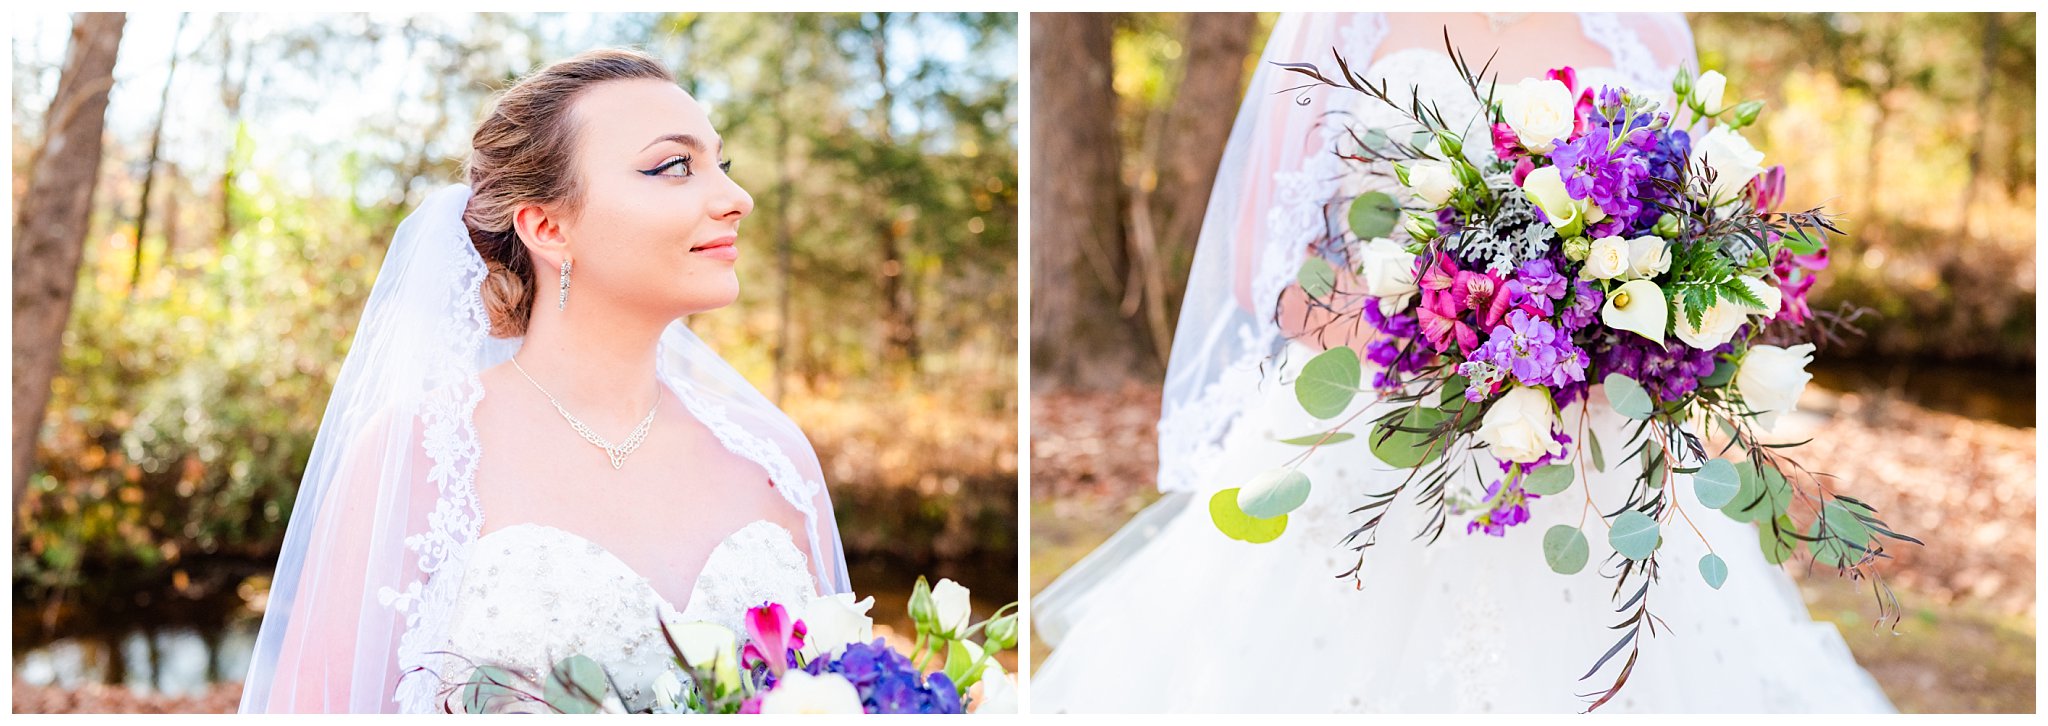 bridal portrait for North Carolina vineyard wedding